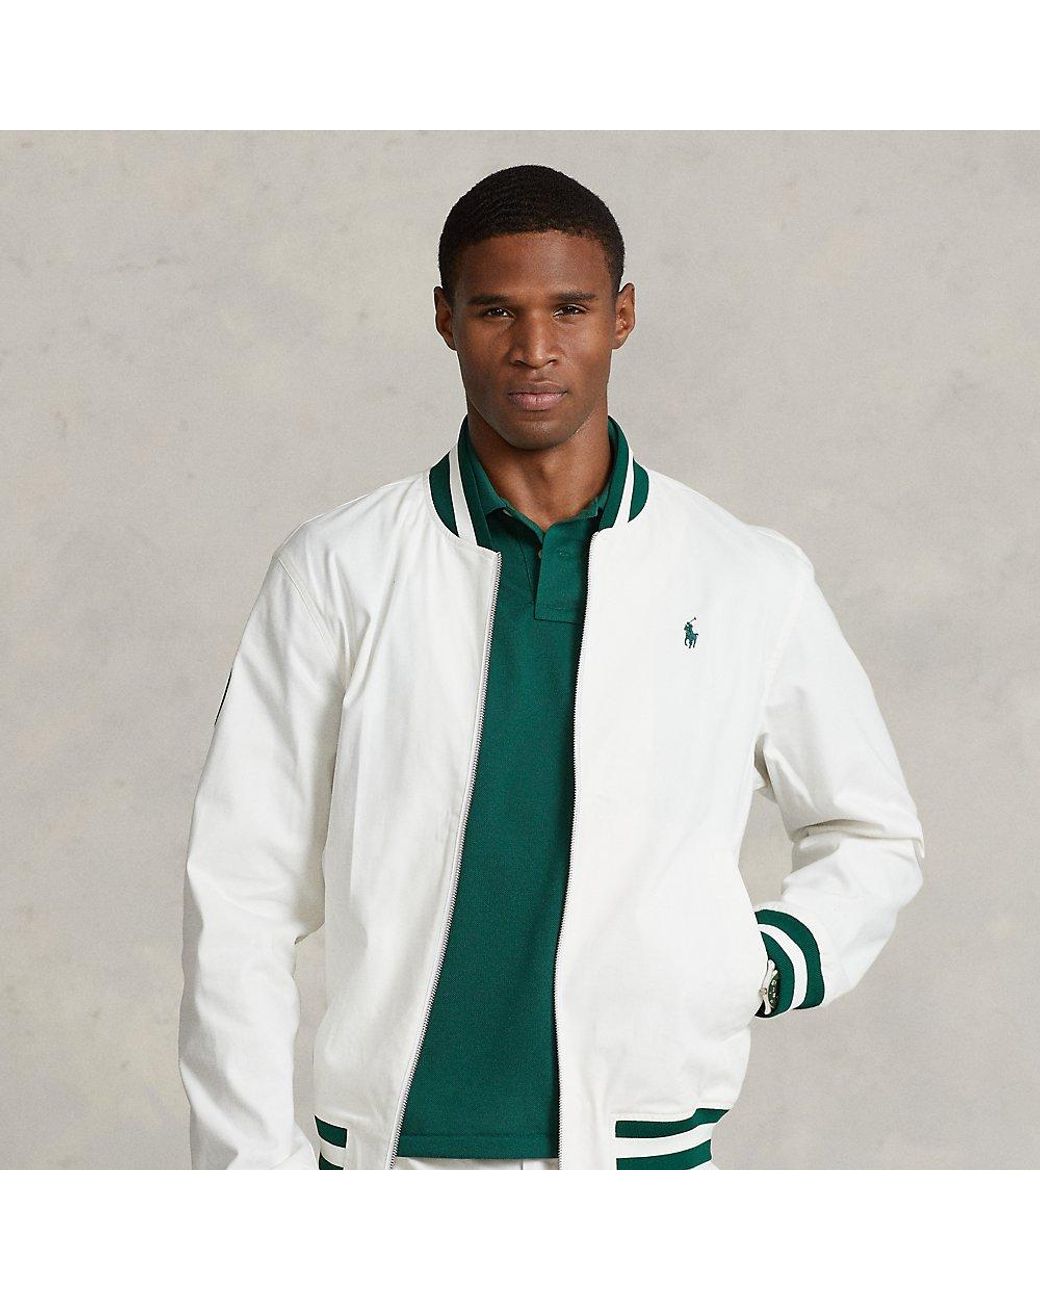 Ralph Lauren Wimbledon Jacket navy, white - ESD Store fashion